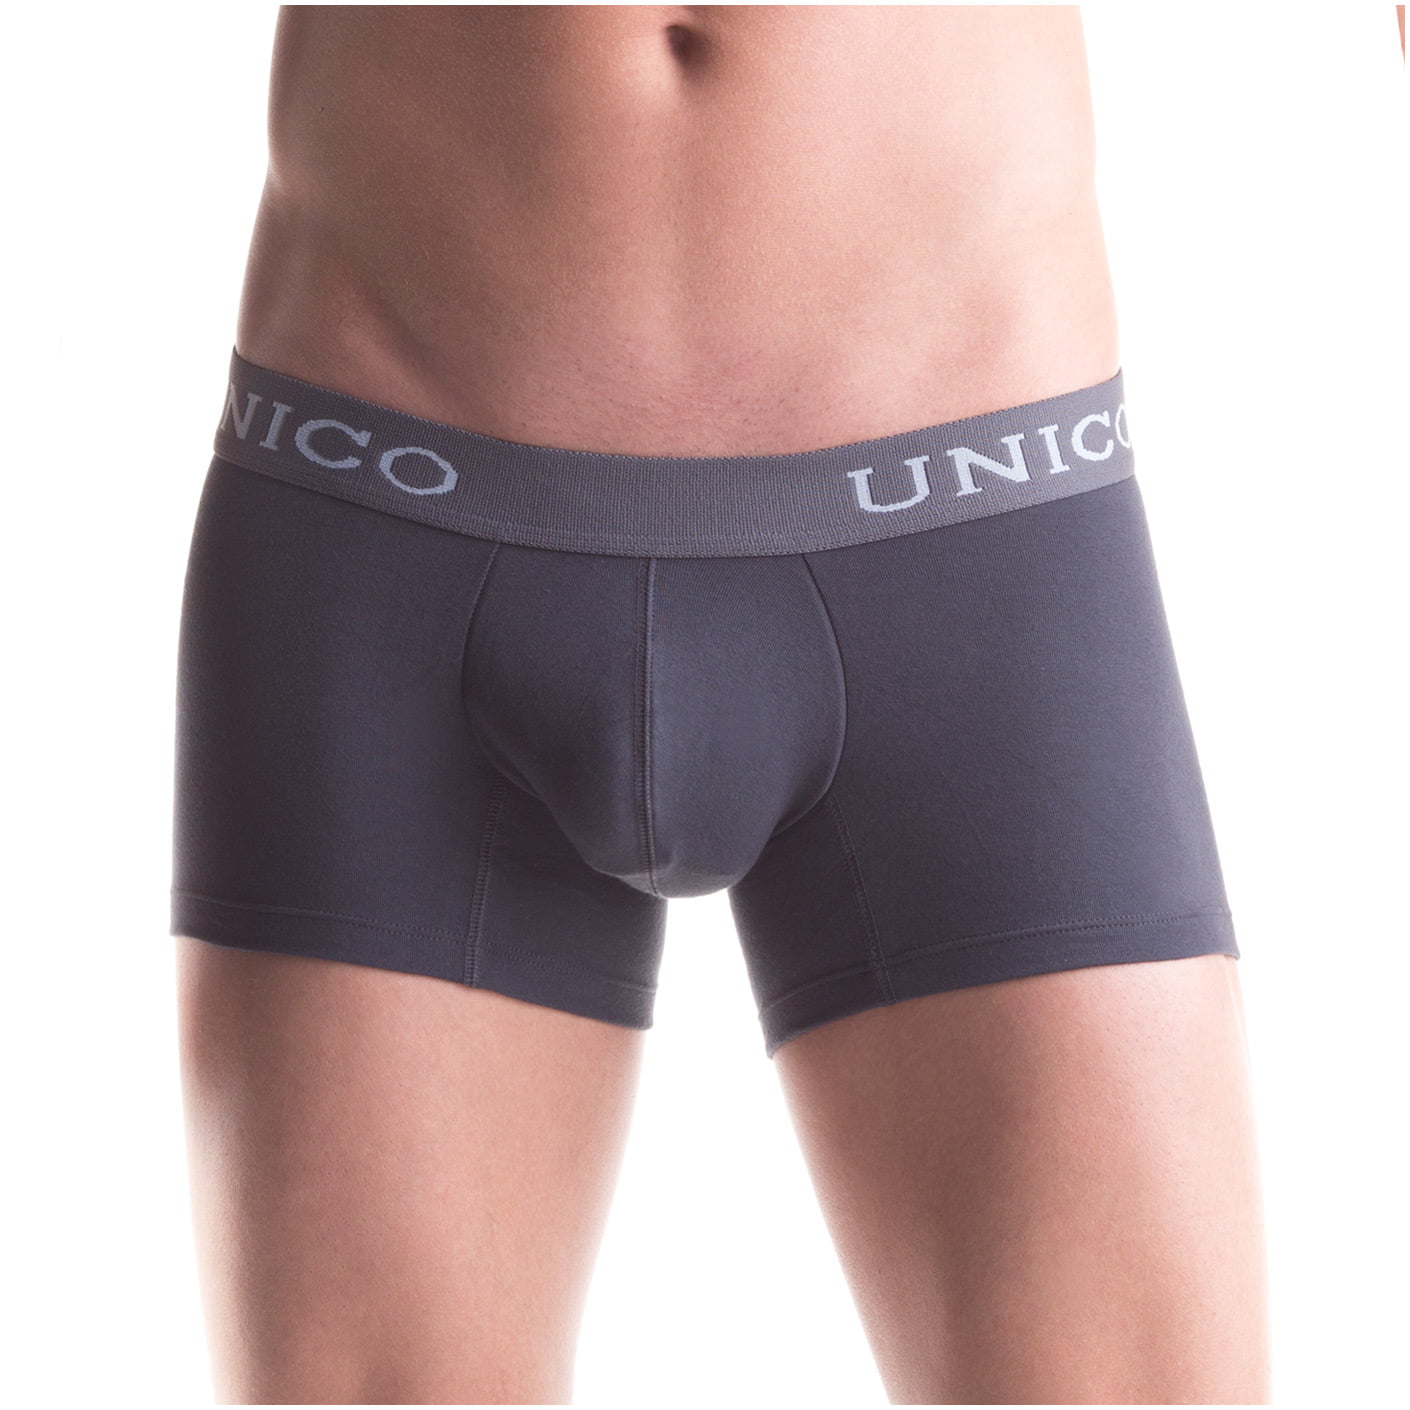 Masculine Underwear Briefs for Men. Ropa Interior Colombiana